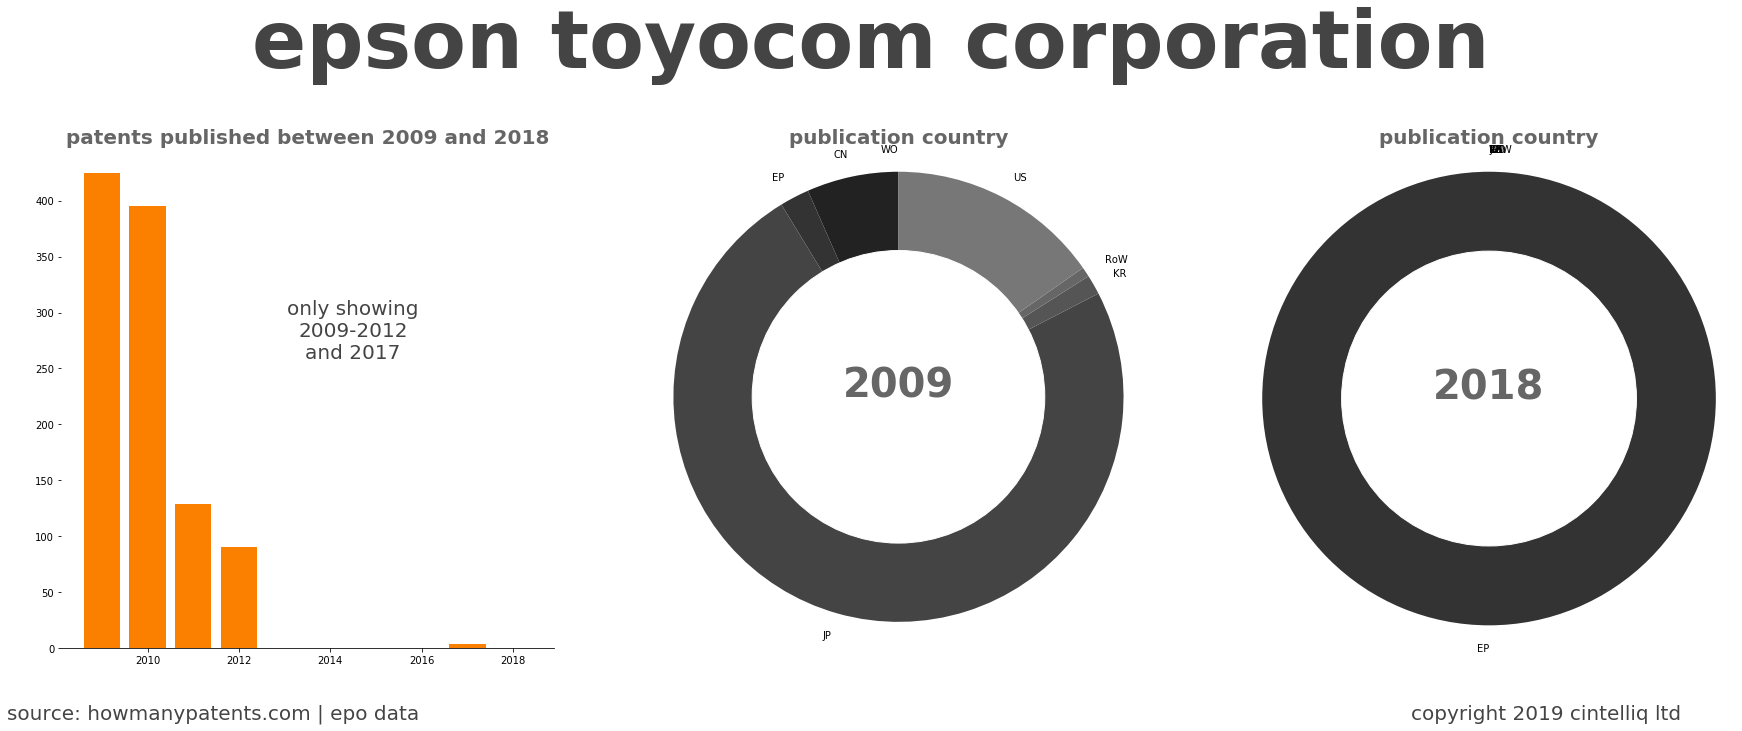 summary of patents for Epson Toyocom Corporation